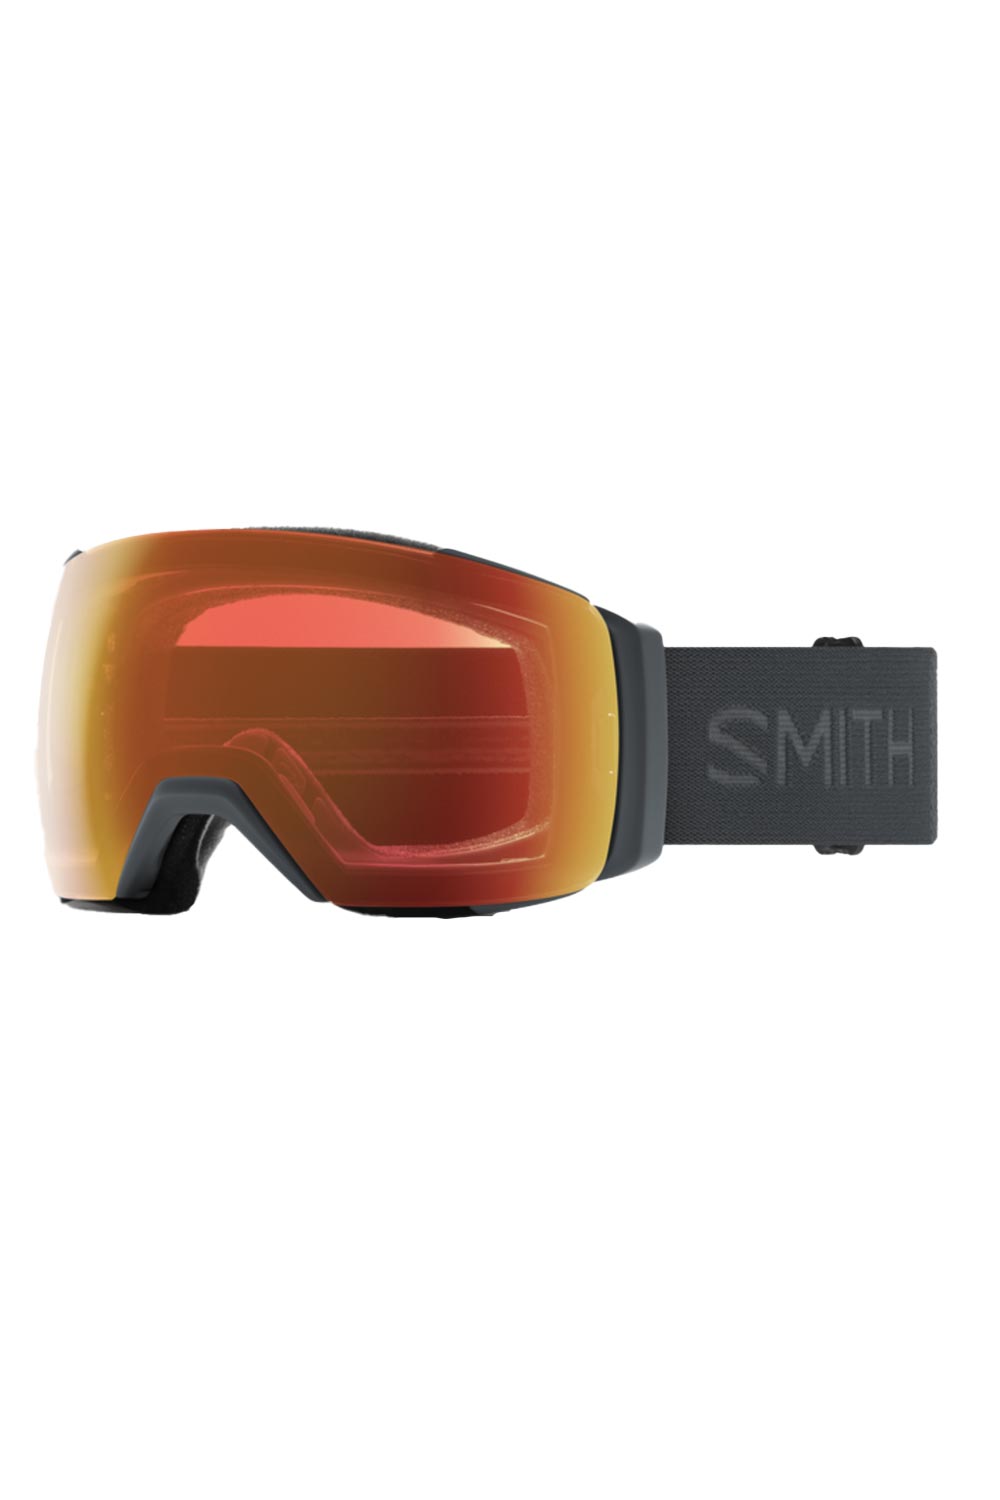 Smith I/O Mag XL goggles, black strap red lens